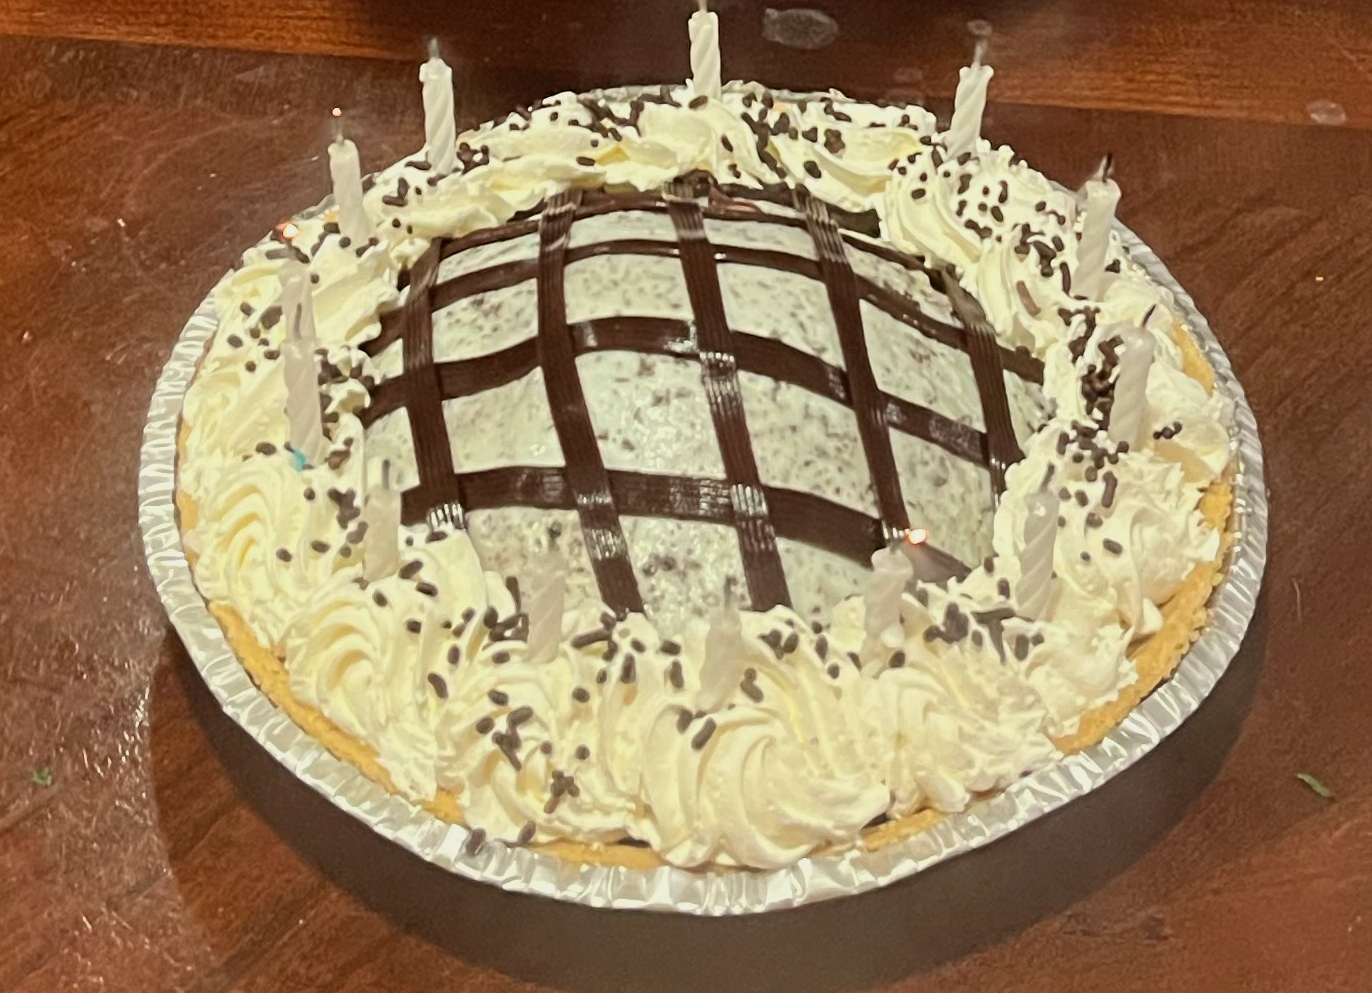 Mint chocolate chip ice cream pie with birthday candles around the edges